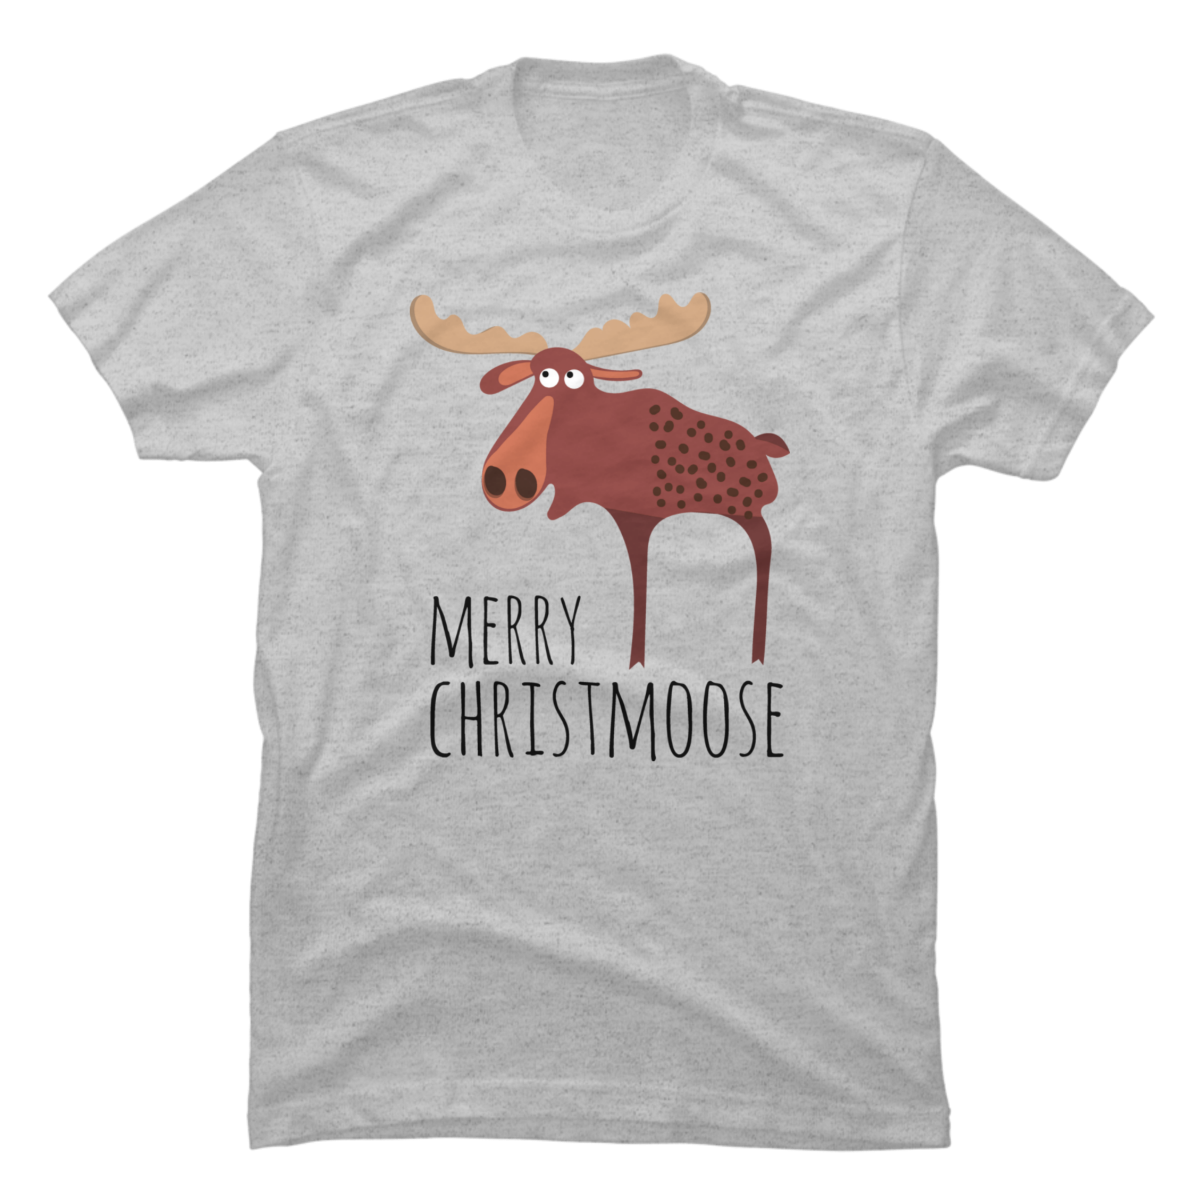 merry christmoose shirt